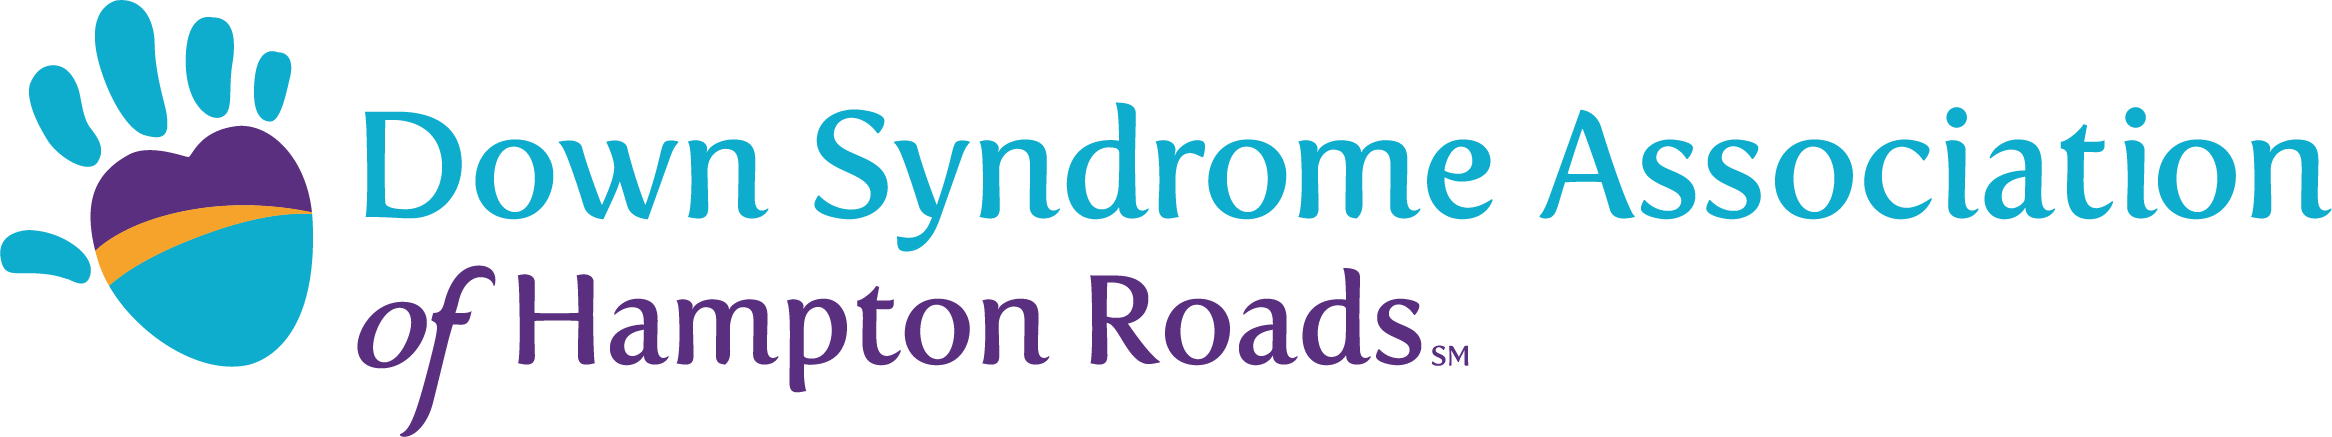 Down Syndrome Association of Hampton Roads